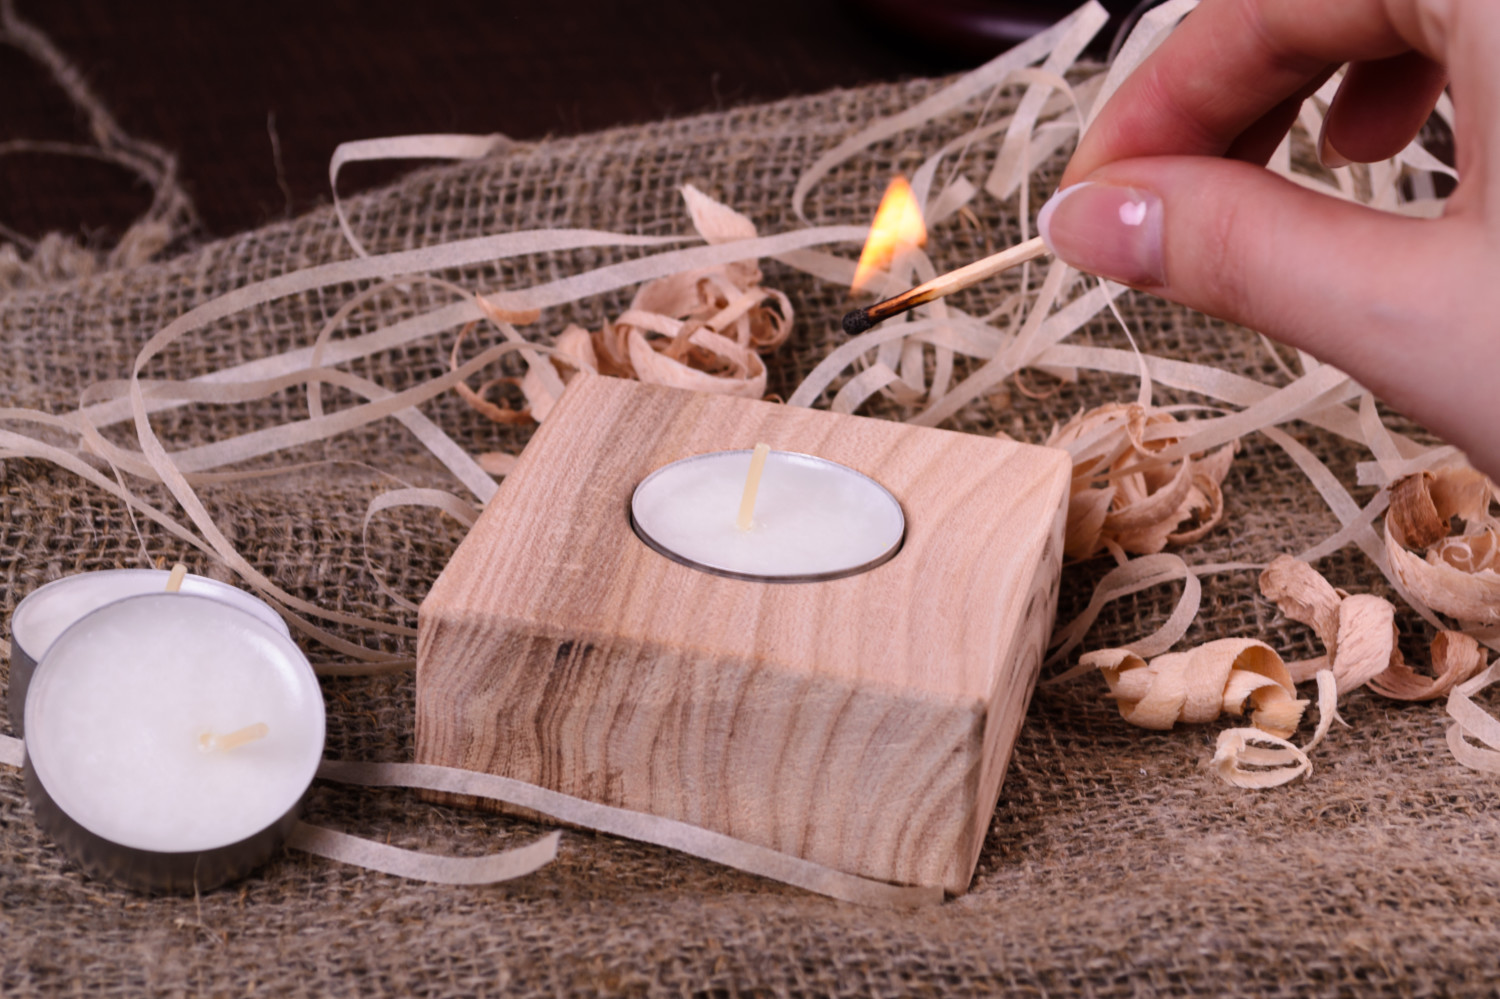 Handmade wooden candlestick designer candle holder home decor ideas photo 1